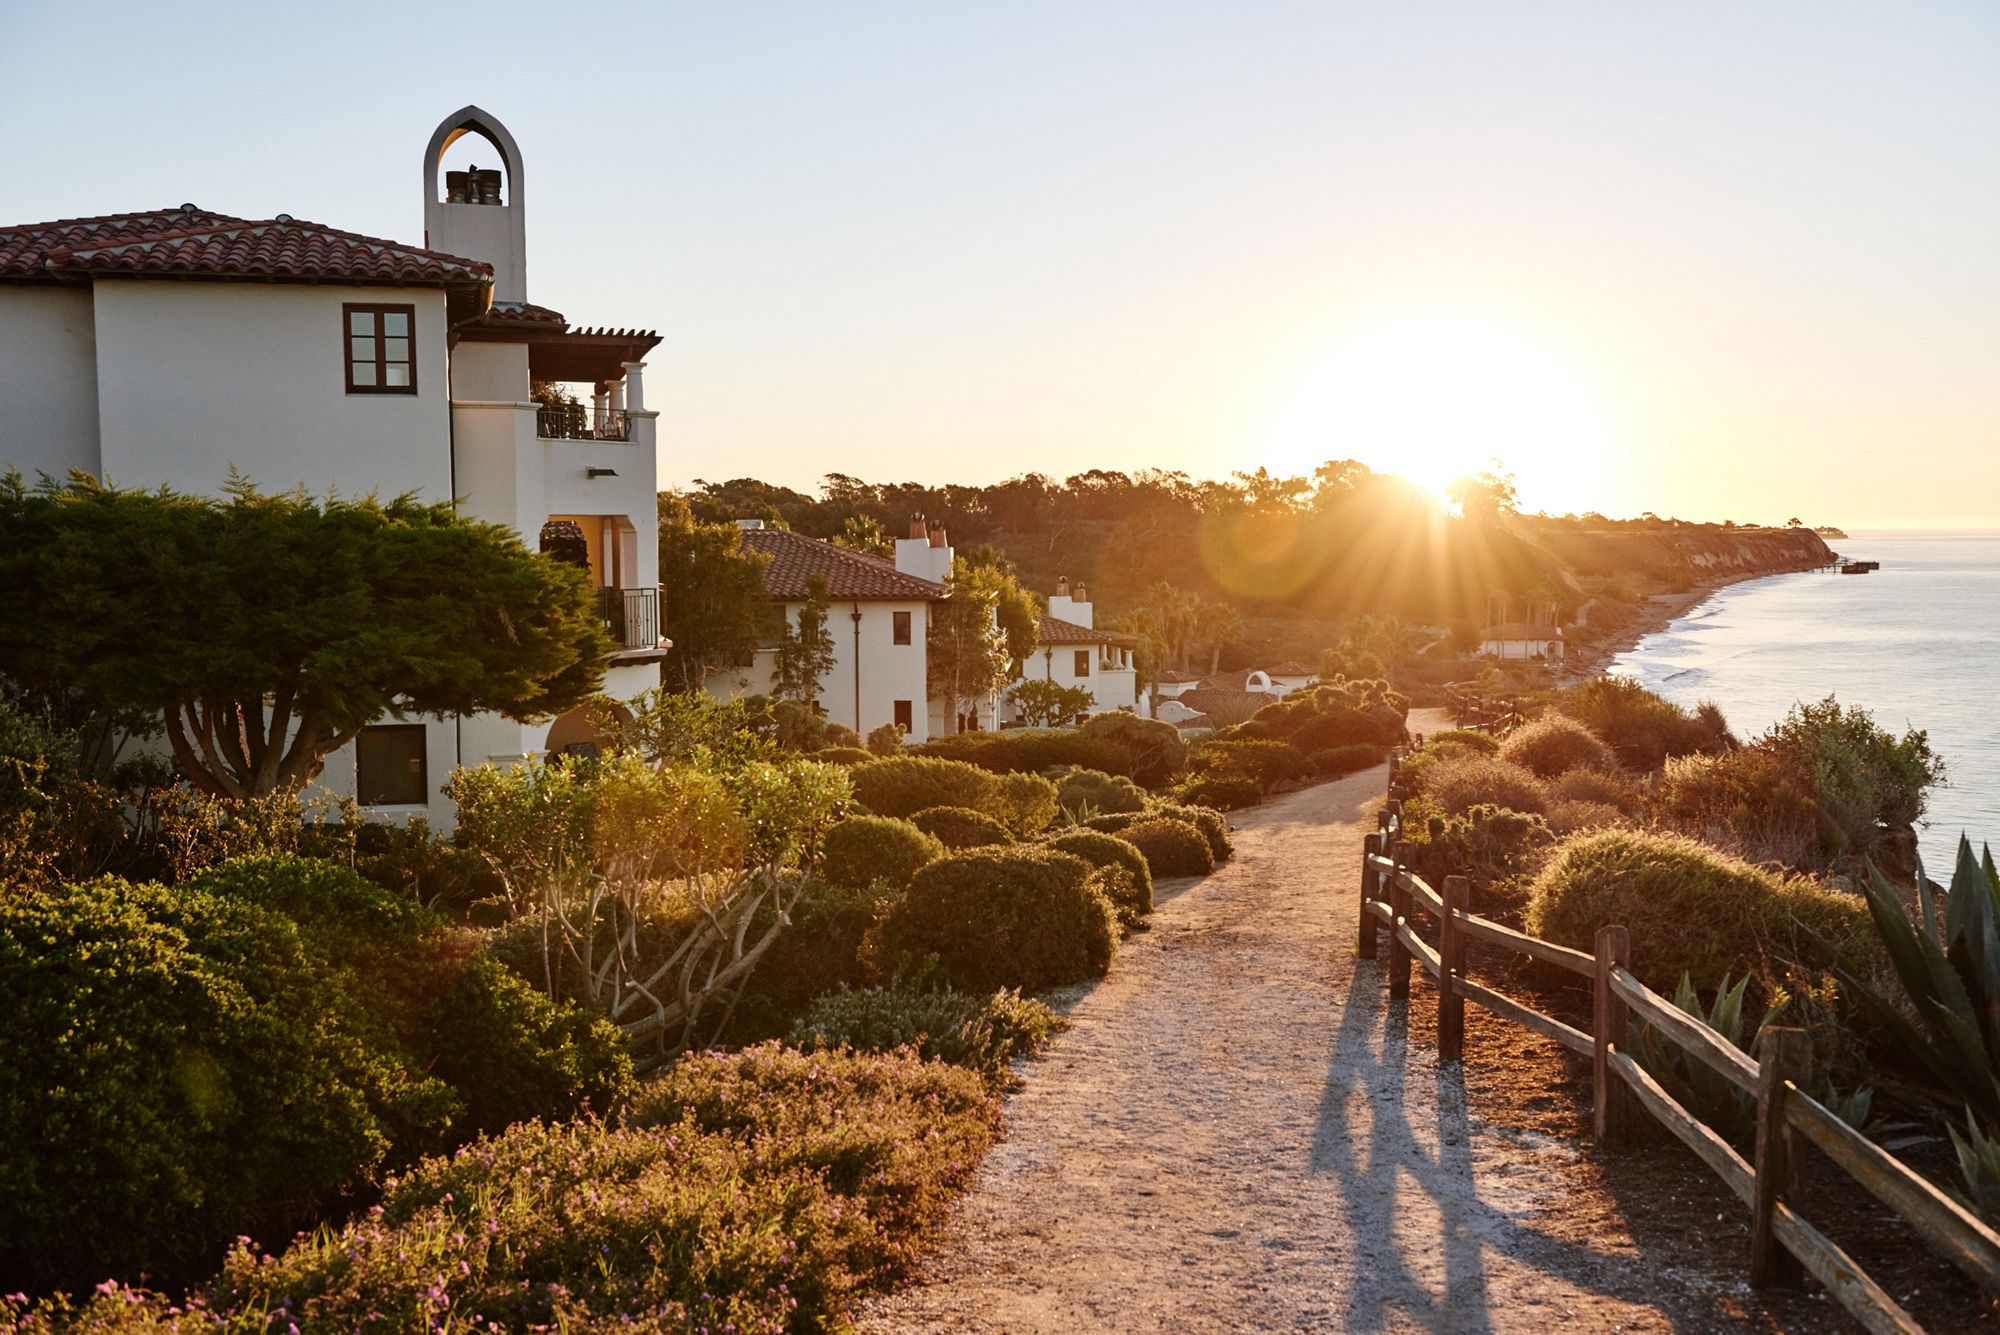 The Ritz-Carlton Bacara, Santa Barbara, California beach resort